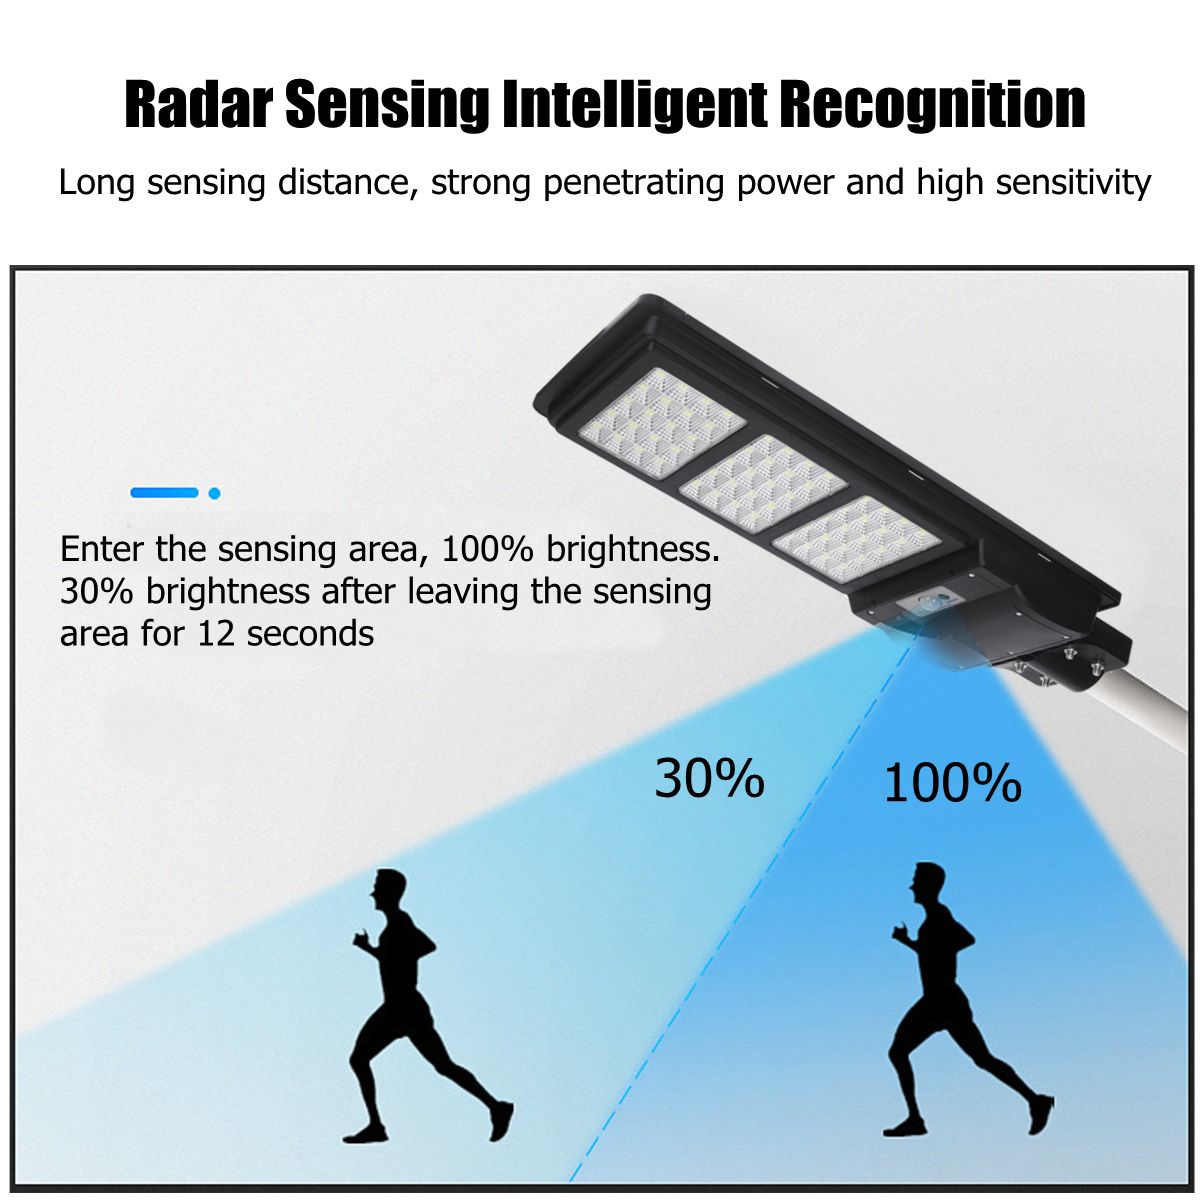 90120150W-160240320LED-Solar-Street-Light-Radar-PIR-Motion-Sensor-Wall-Lamp-WRemote-1709058